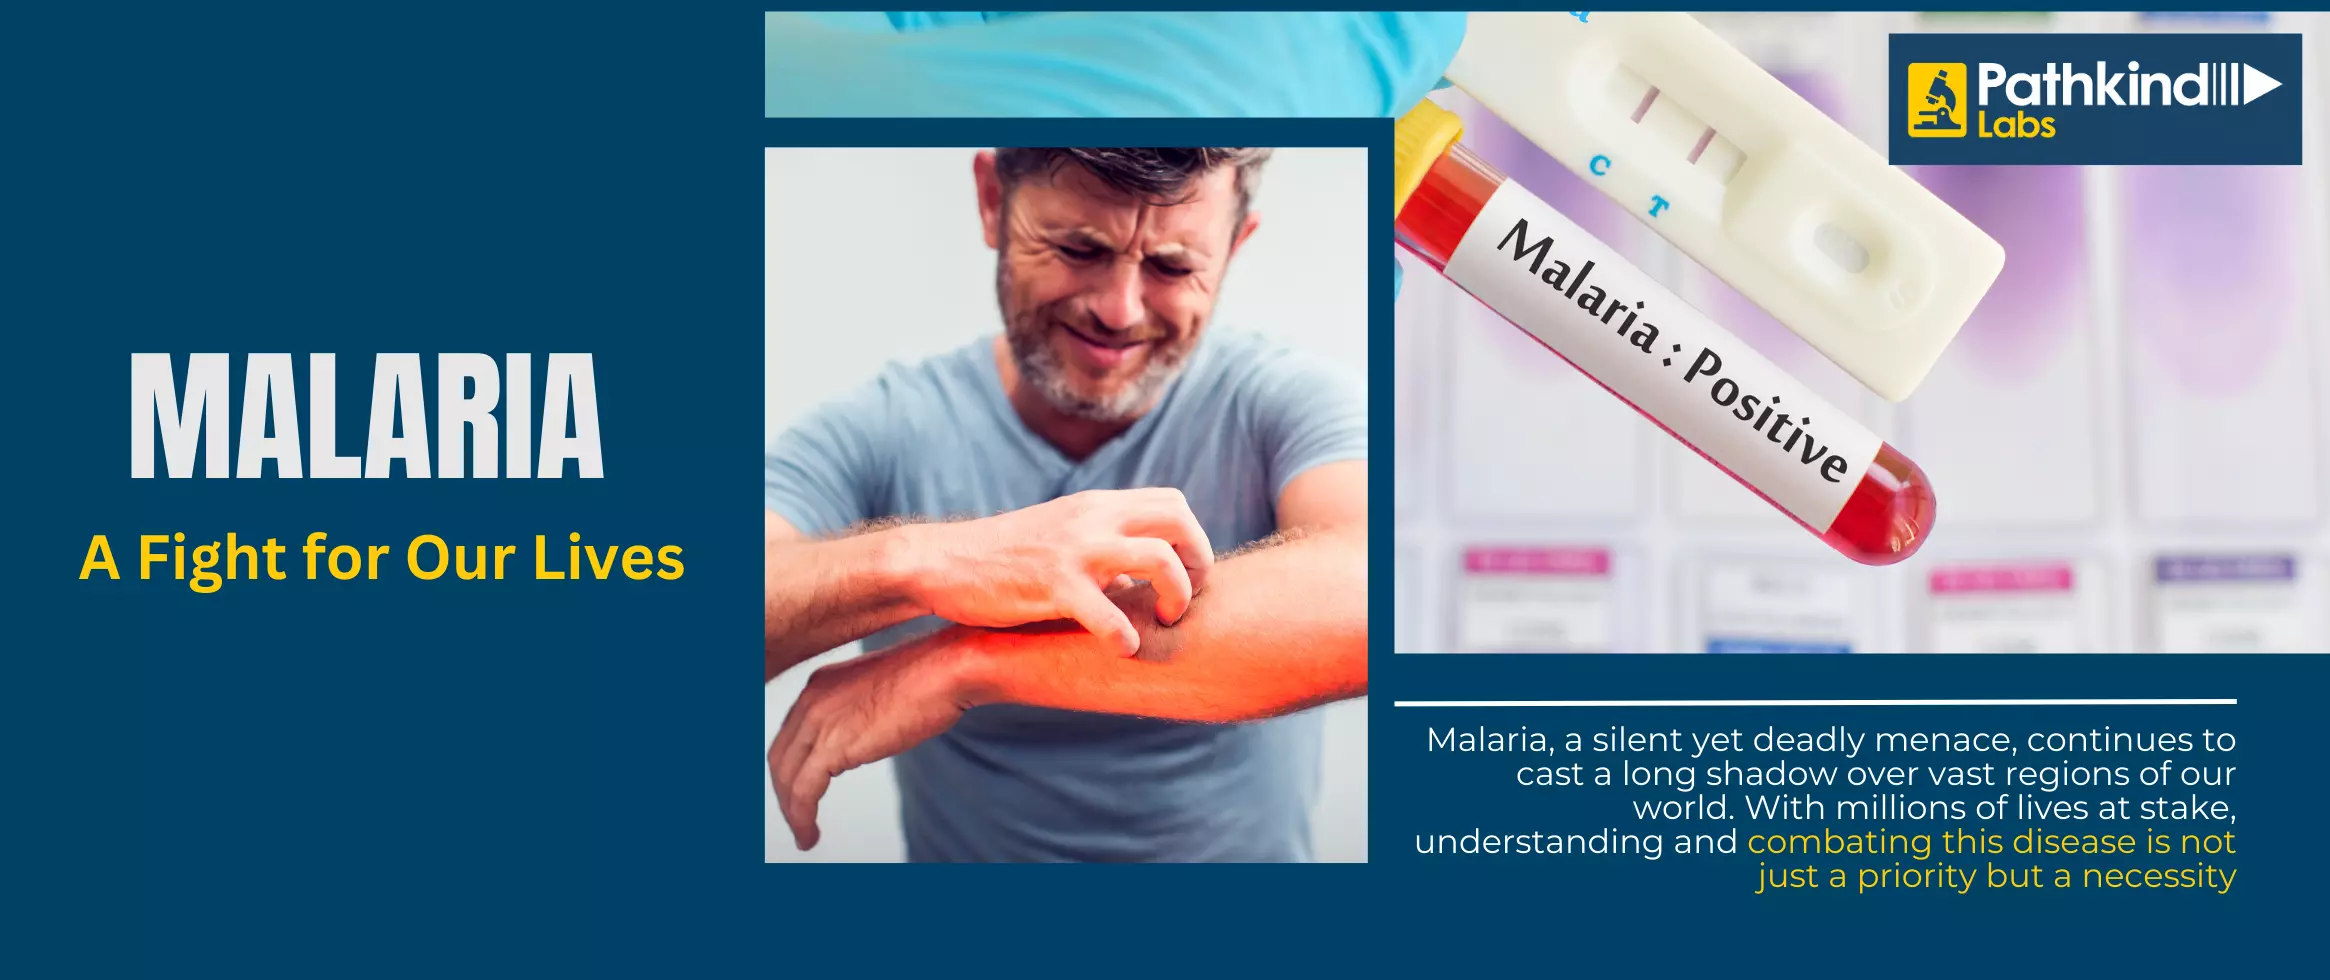 malaria testing and treatment